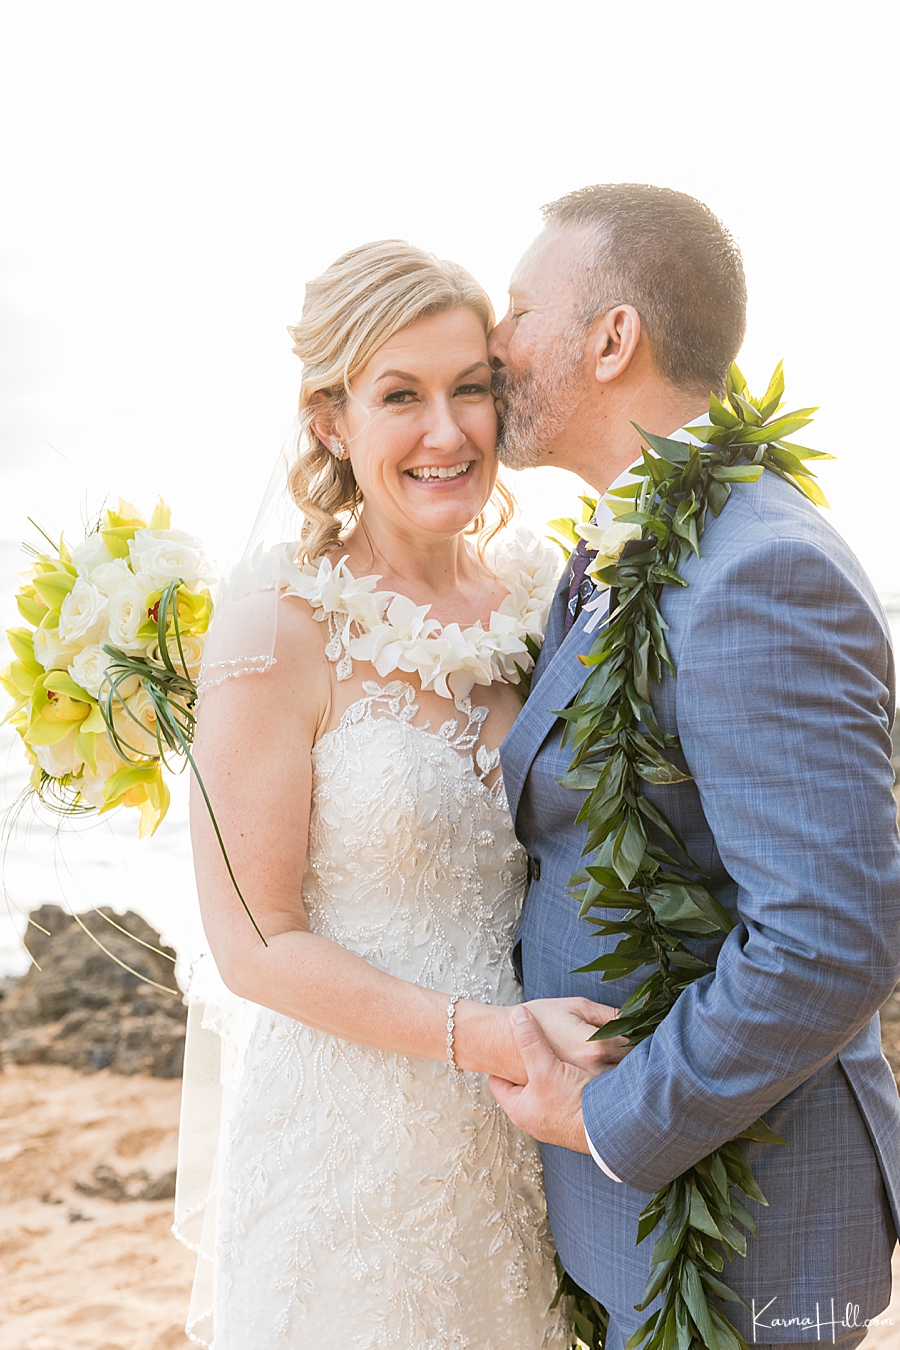 Practically Disney - Stephanie & Juan's Micro Wedding in Maui